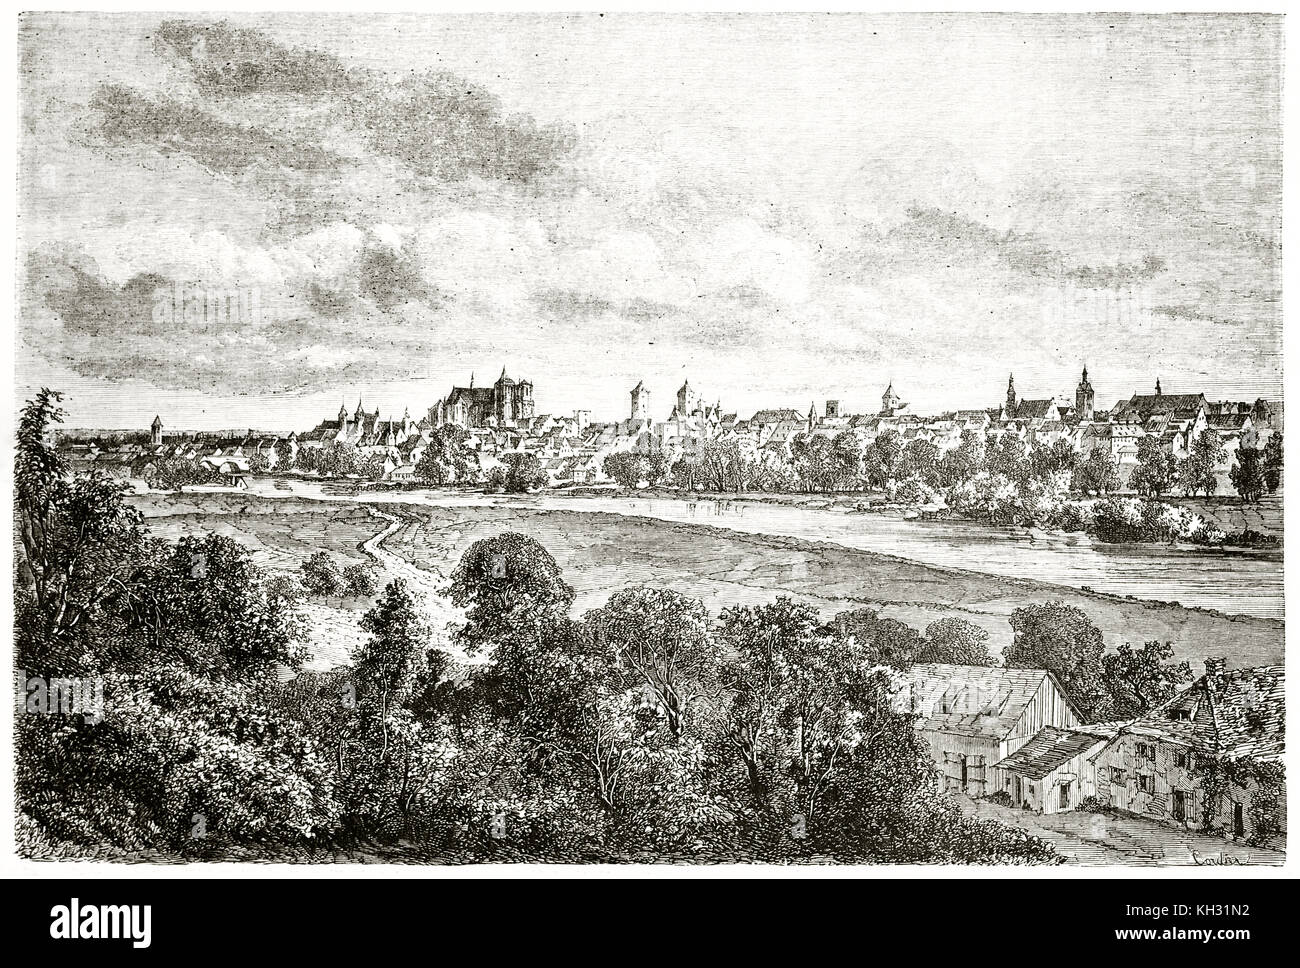 Vista anterior de Regensburg desde Stadtamhof, Alemania. Por Lancelot, publ. en le Tour du Monde, París, 1863 Foto de stock